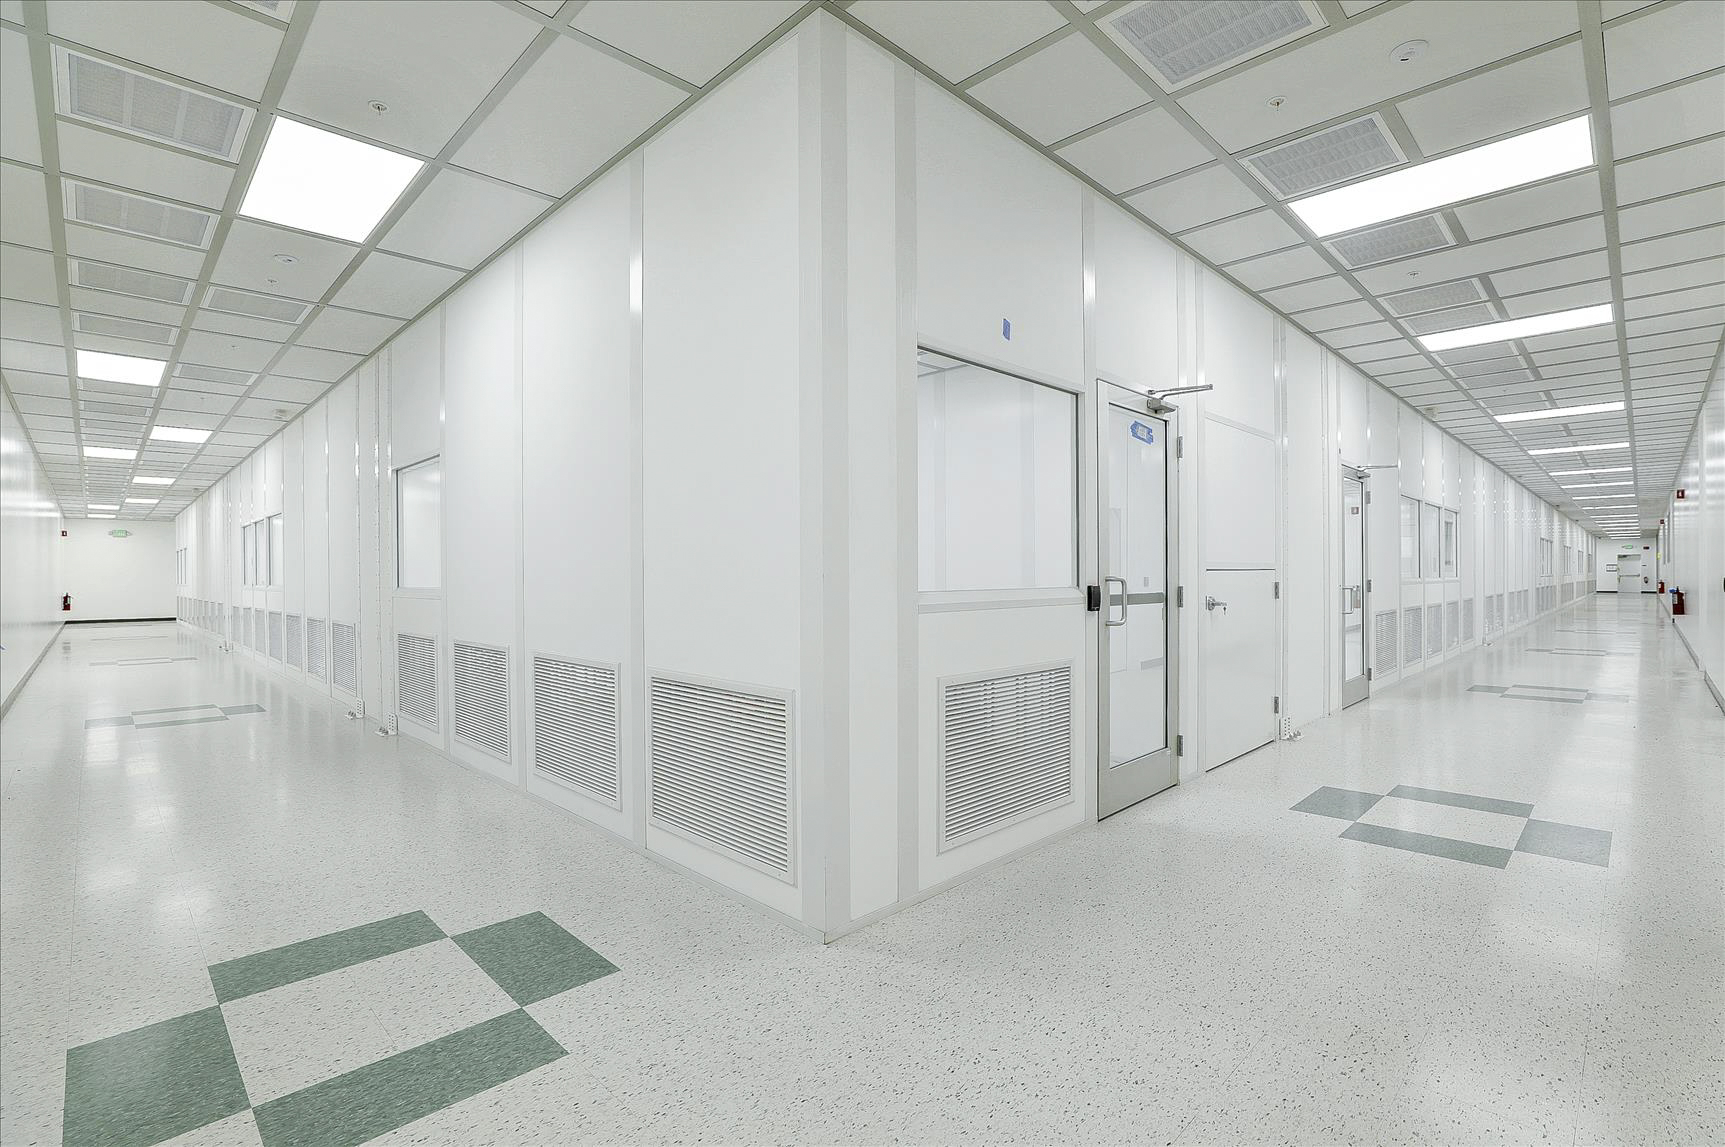 Modular hallways